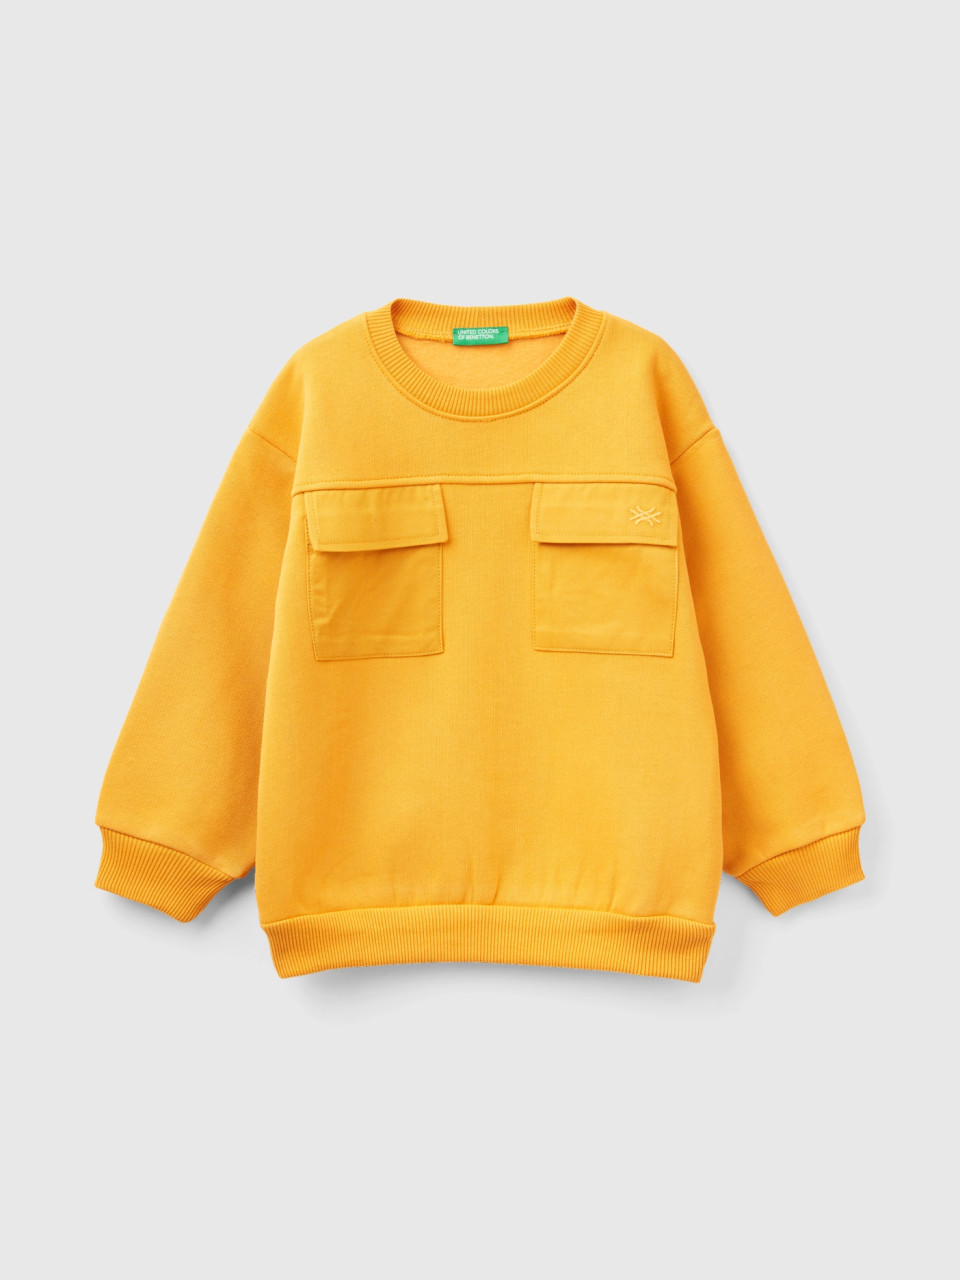 Benetton, Warm Sweatshirt With Pockets, Yellow, Kids